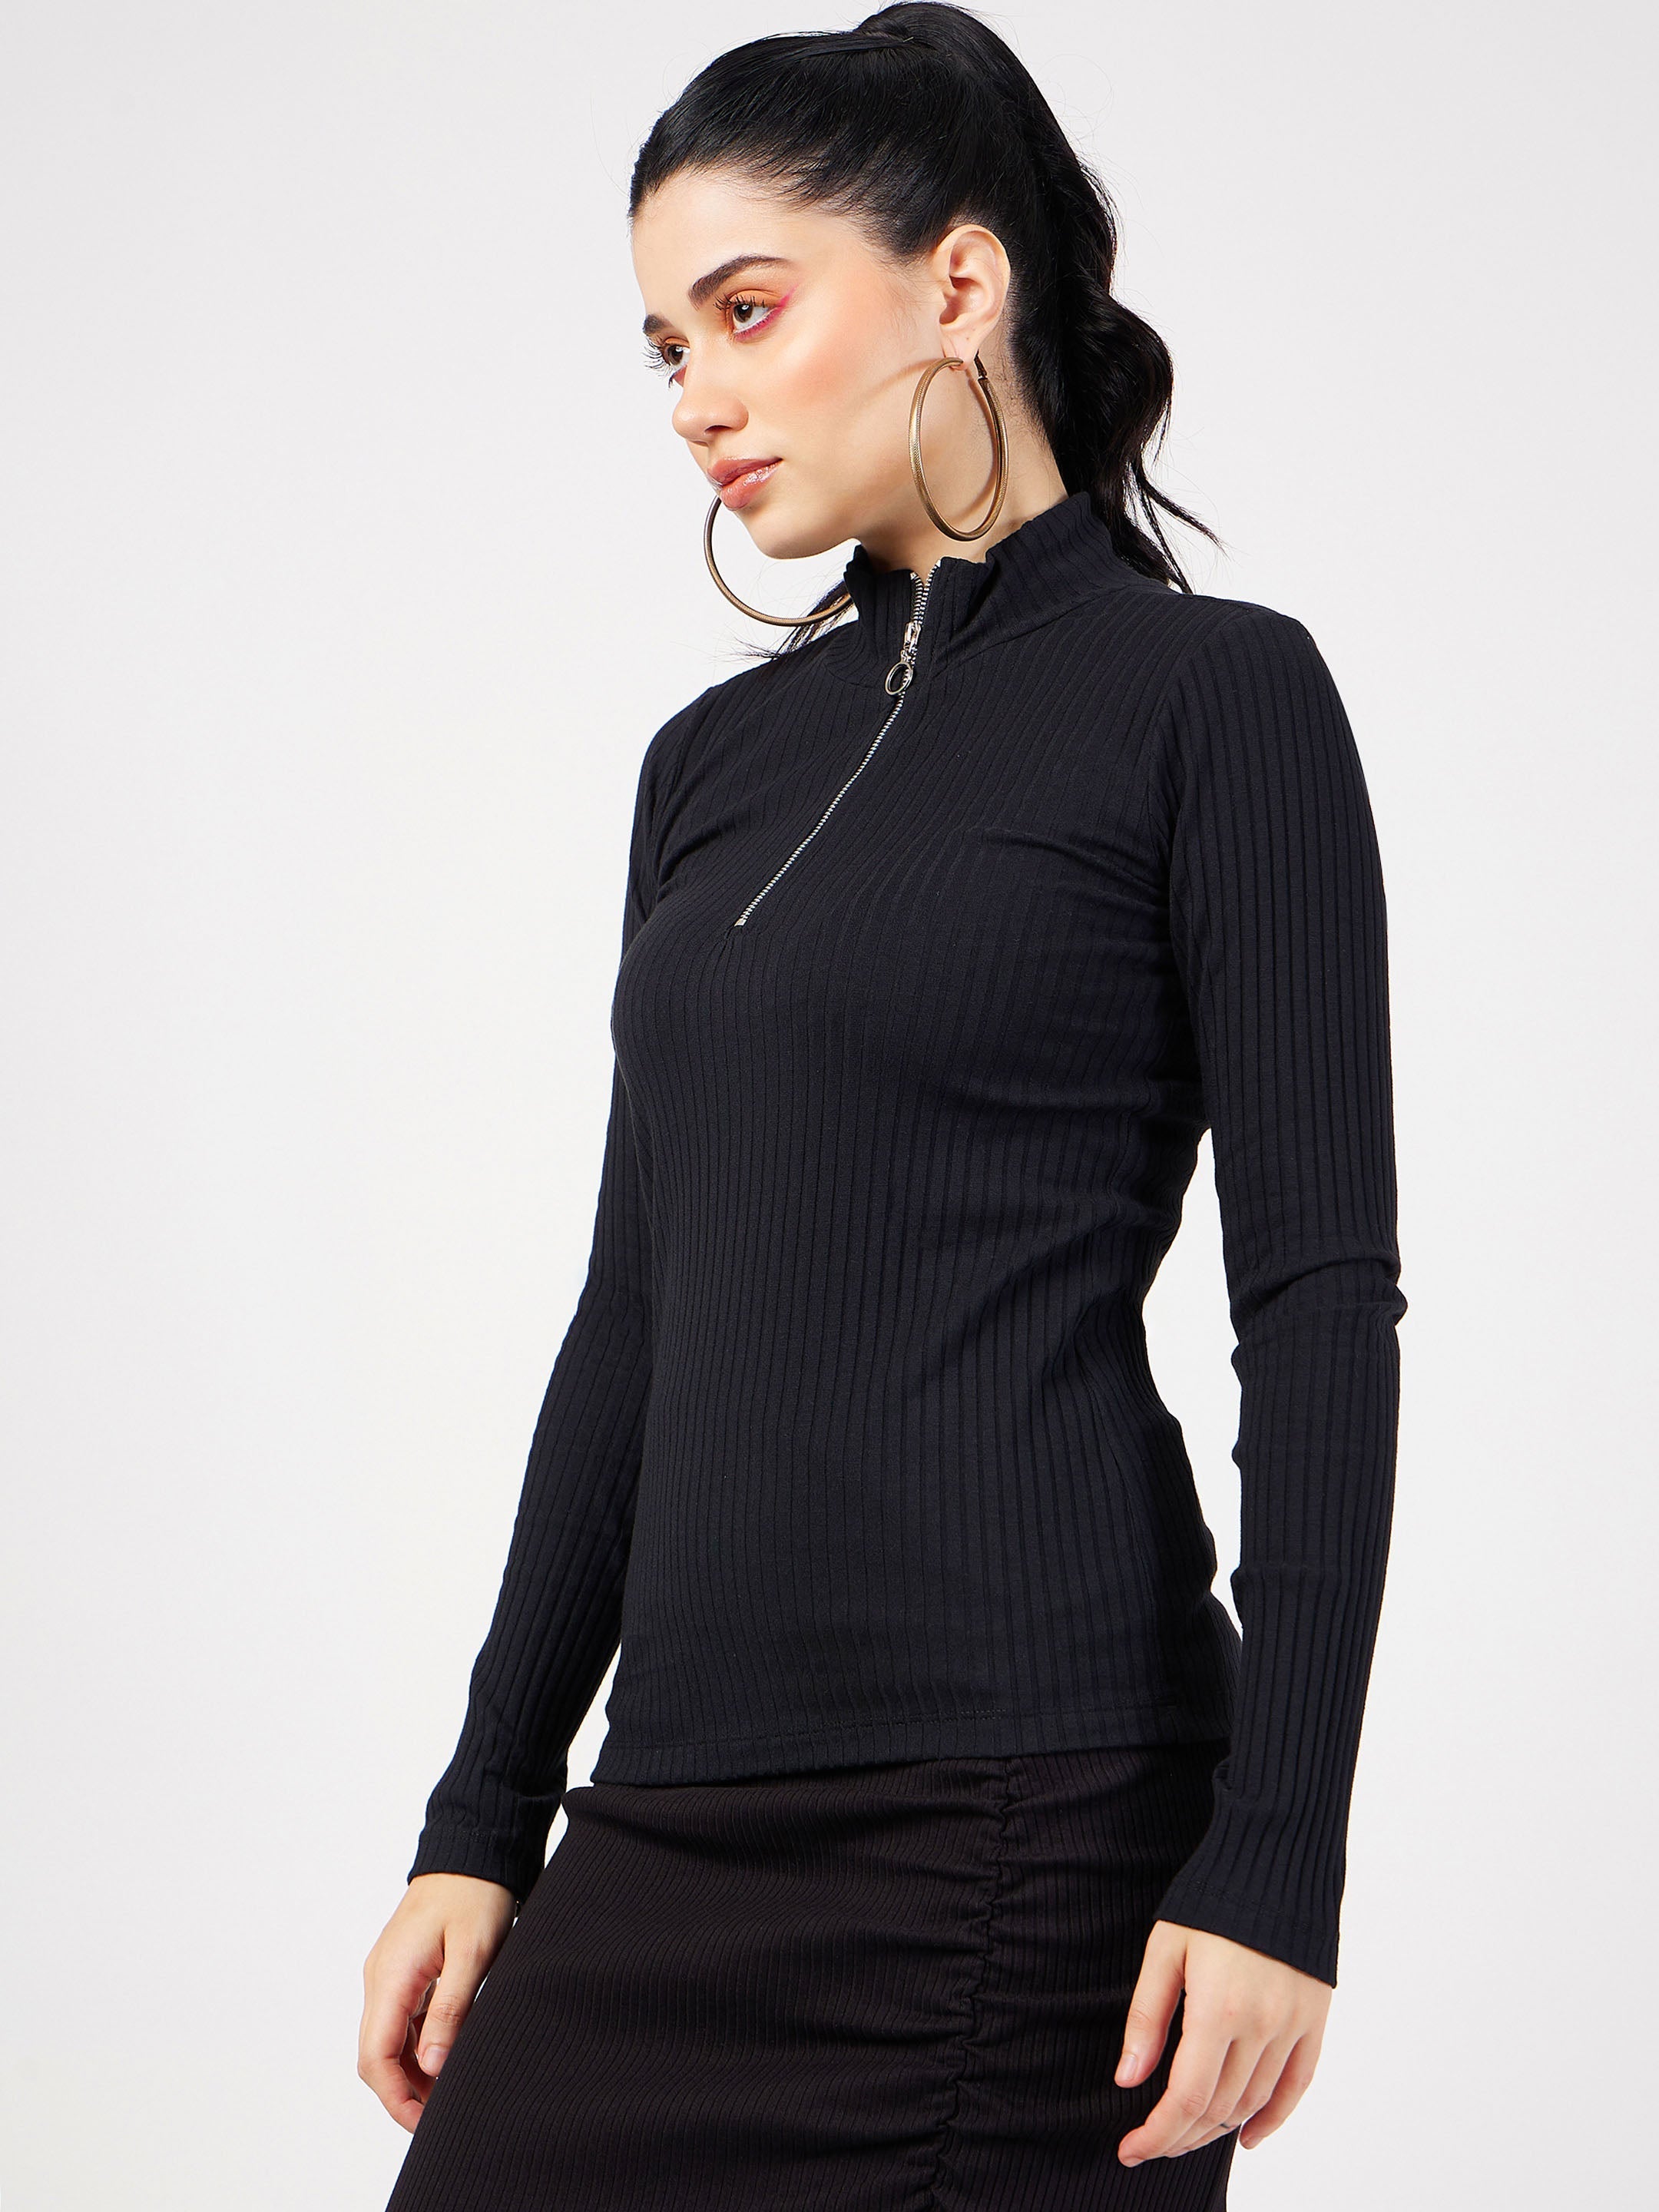 Women's Black Rib Front Zipper Full Sleeves Top - Lyush